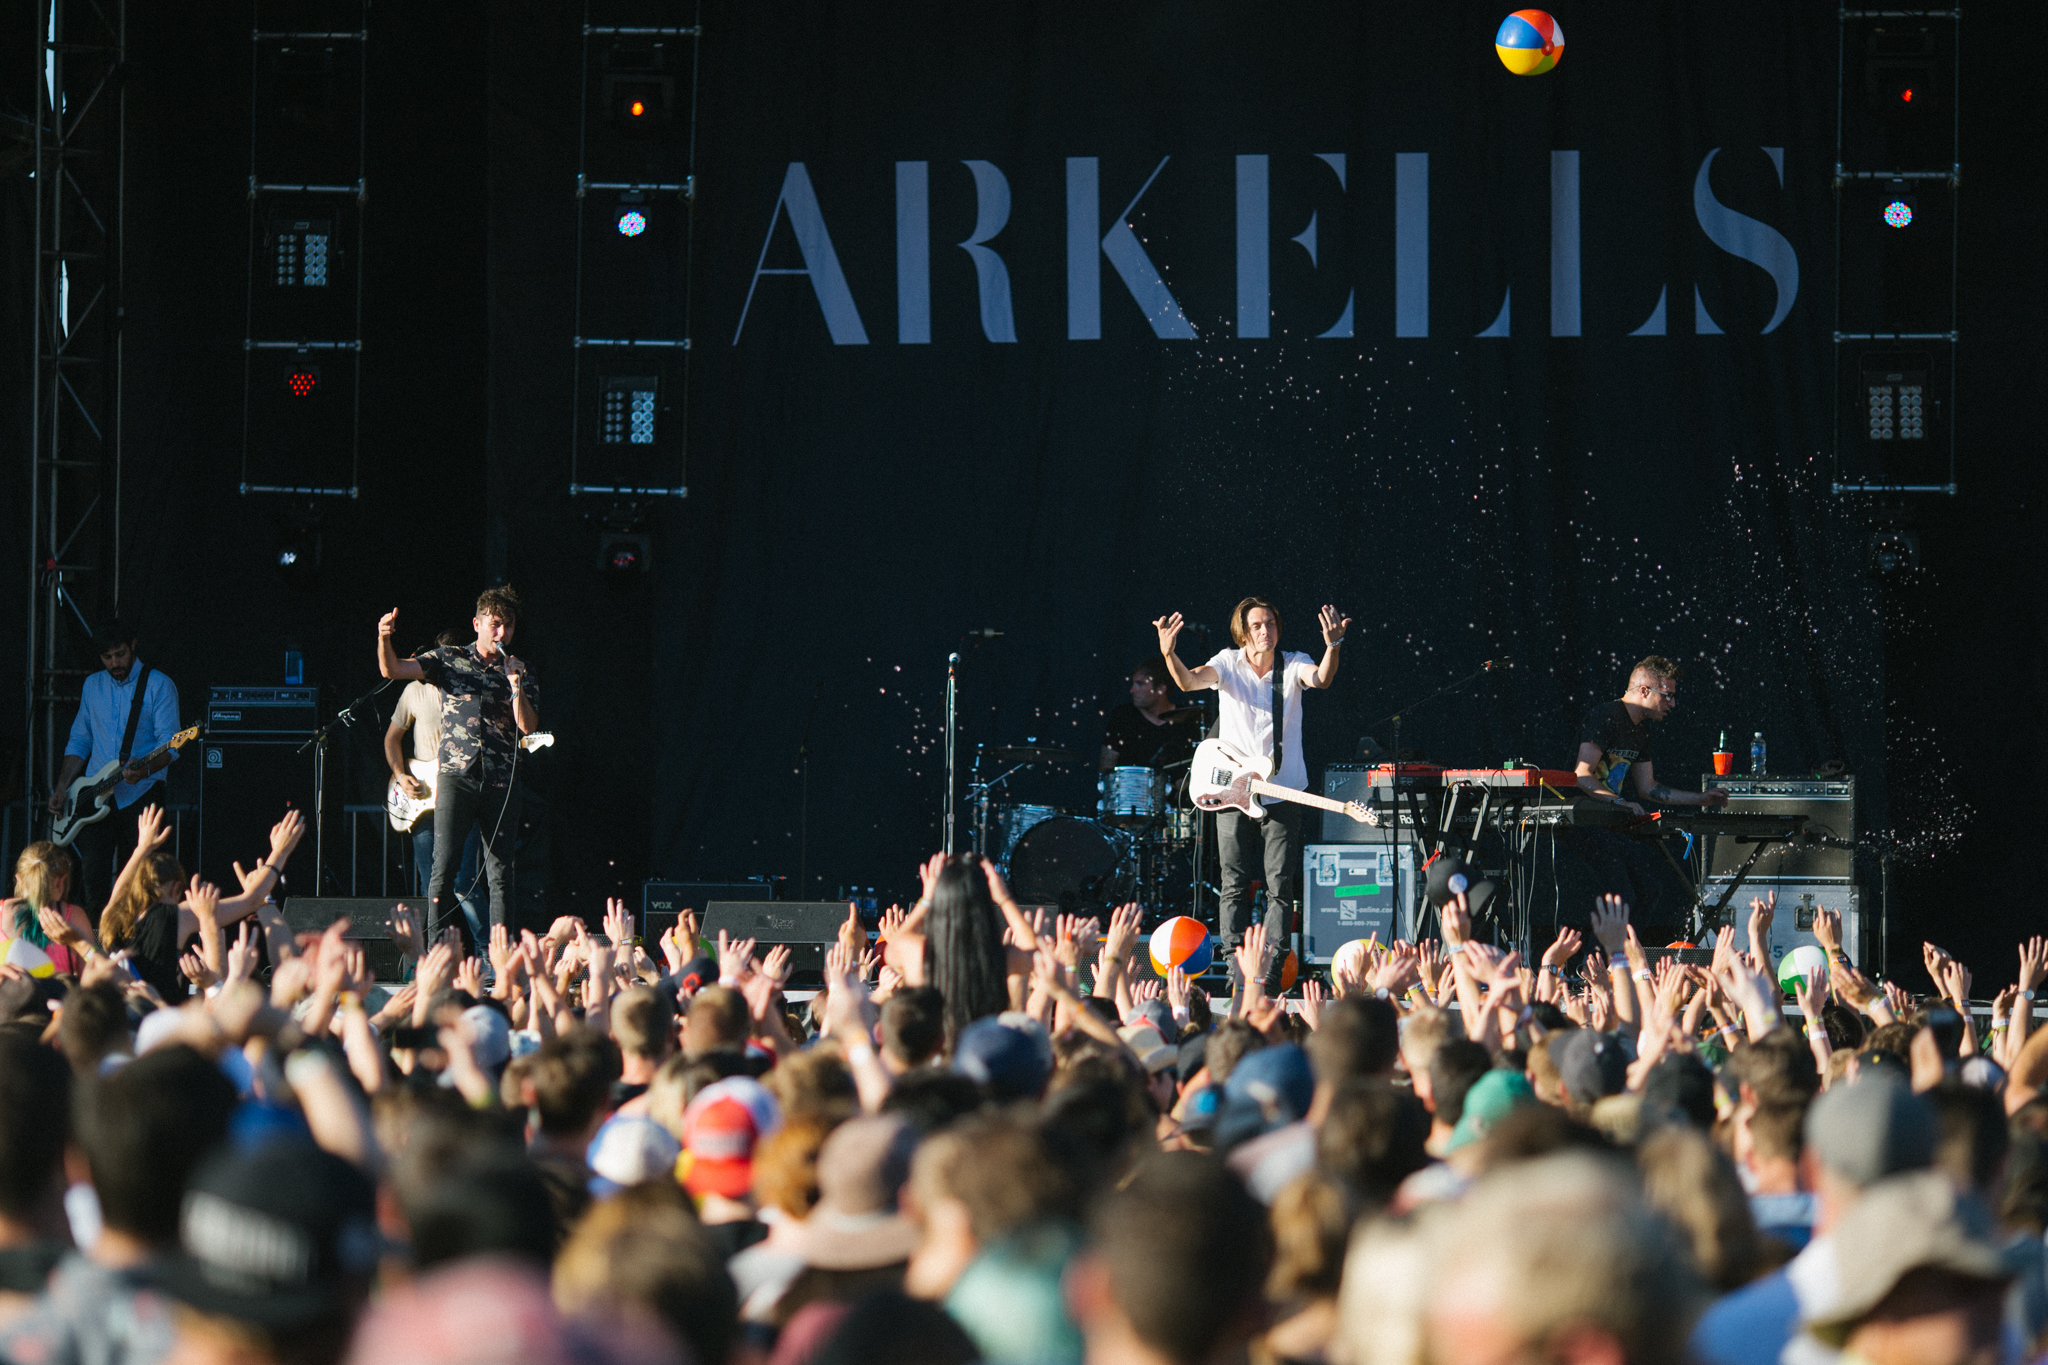 Arkells - Photo by Lindsey Blane